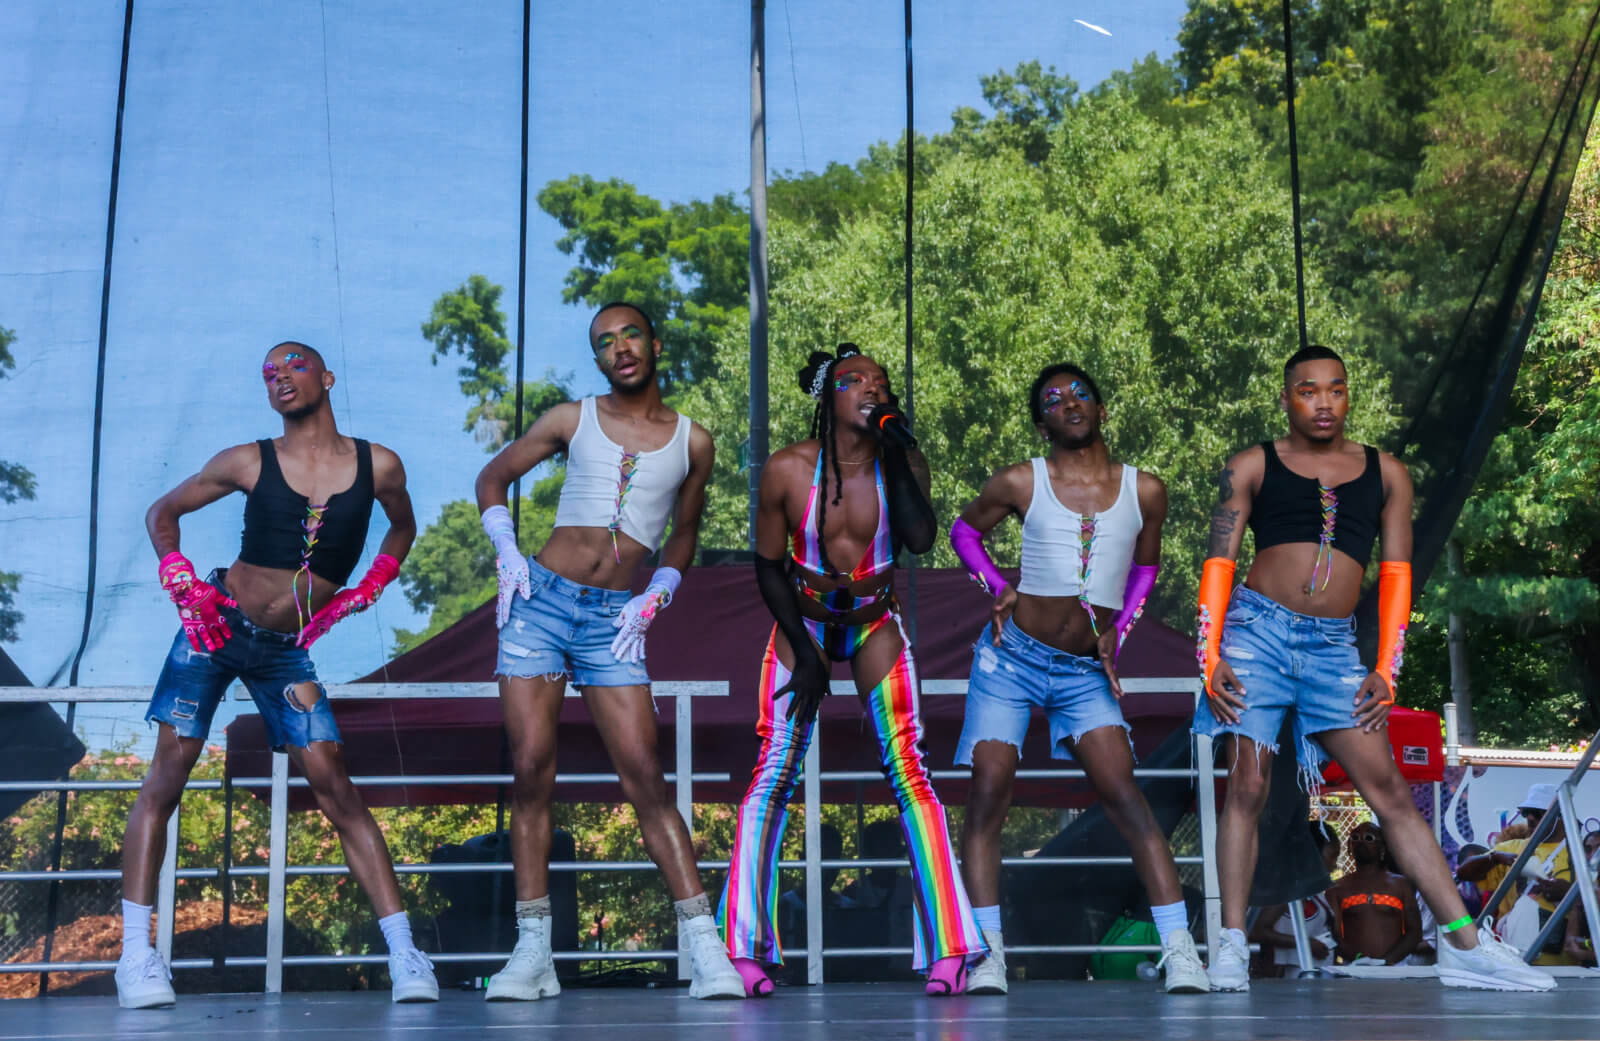 Pride returns to Harlem